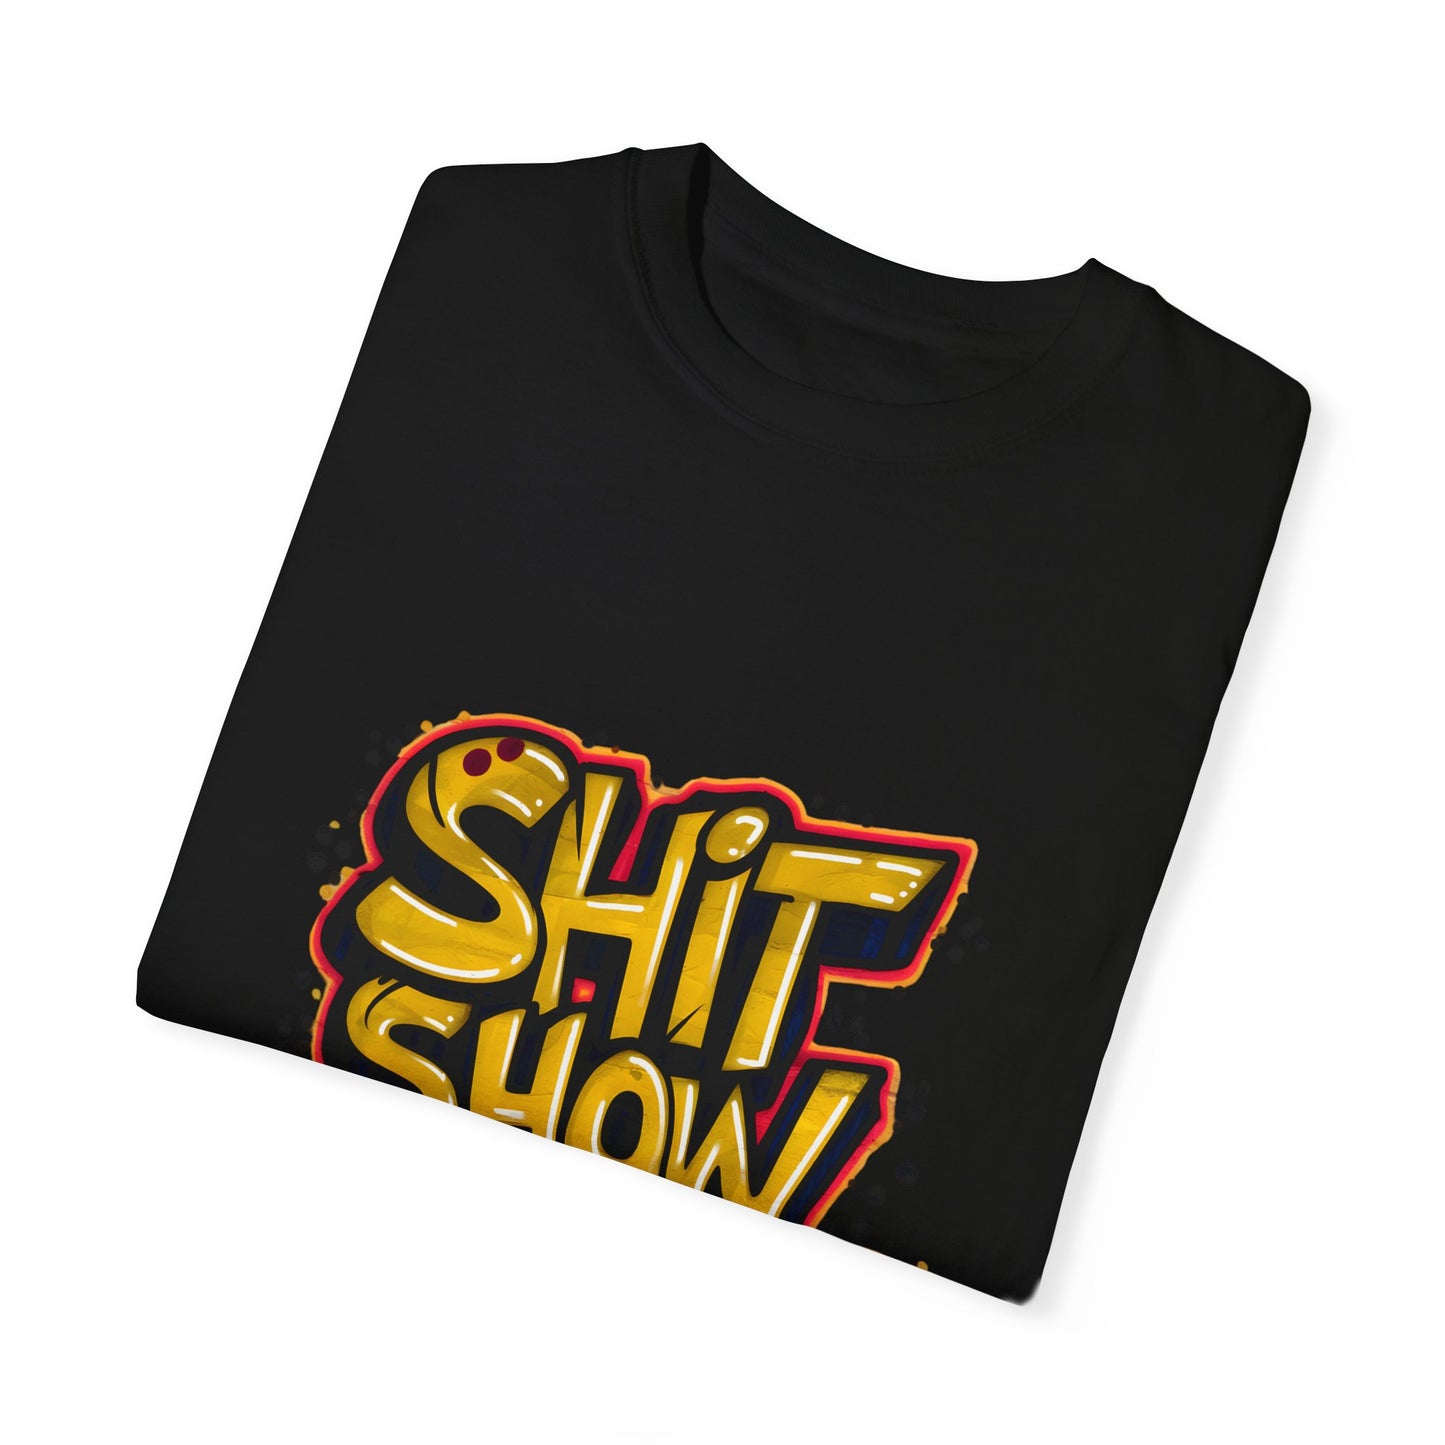 Shit Show Supervisor Urban Sarcastic Graphic Unisex Garment Dyed T-shirt Cotton Funny Humorous Graphic Soft Premium Unisex Men Women Black T-shirt Birthday Gift-17